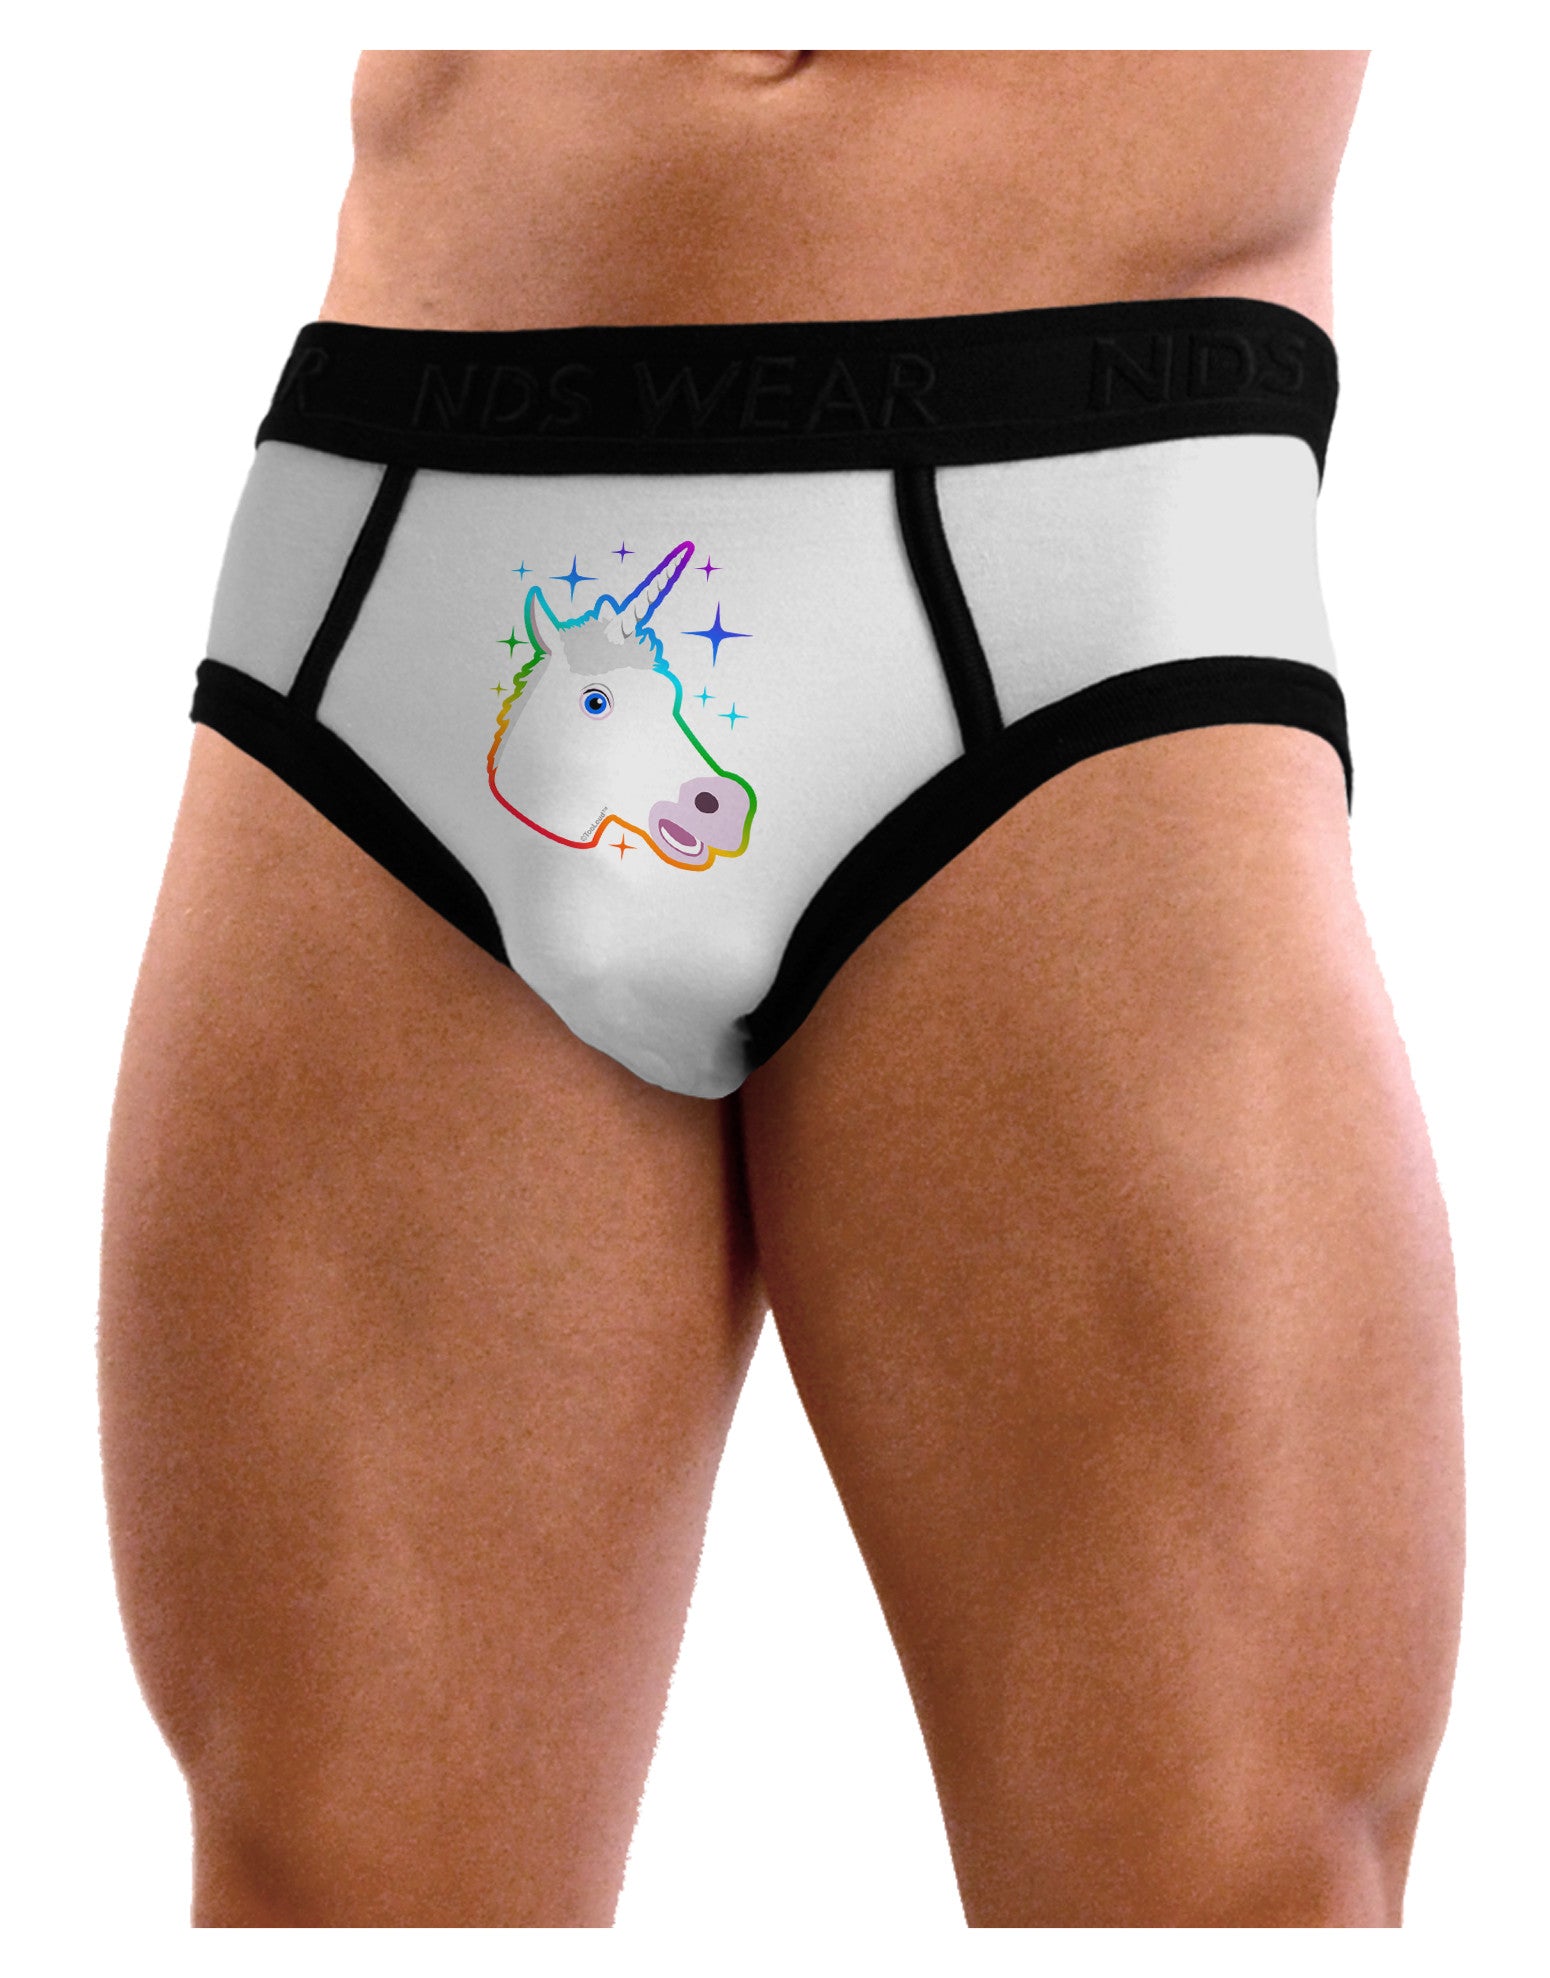 Magical Rainbow Sparkle Unicorn Mens NDS Wear Briefs Underwear